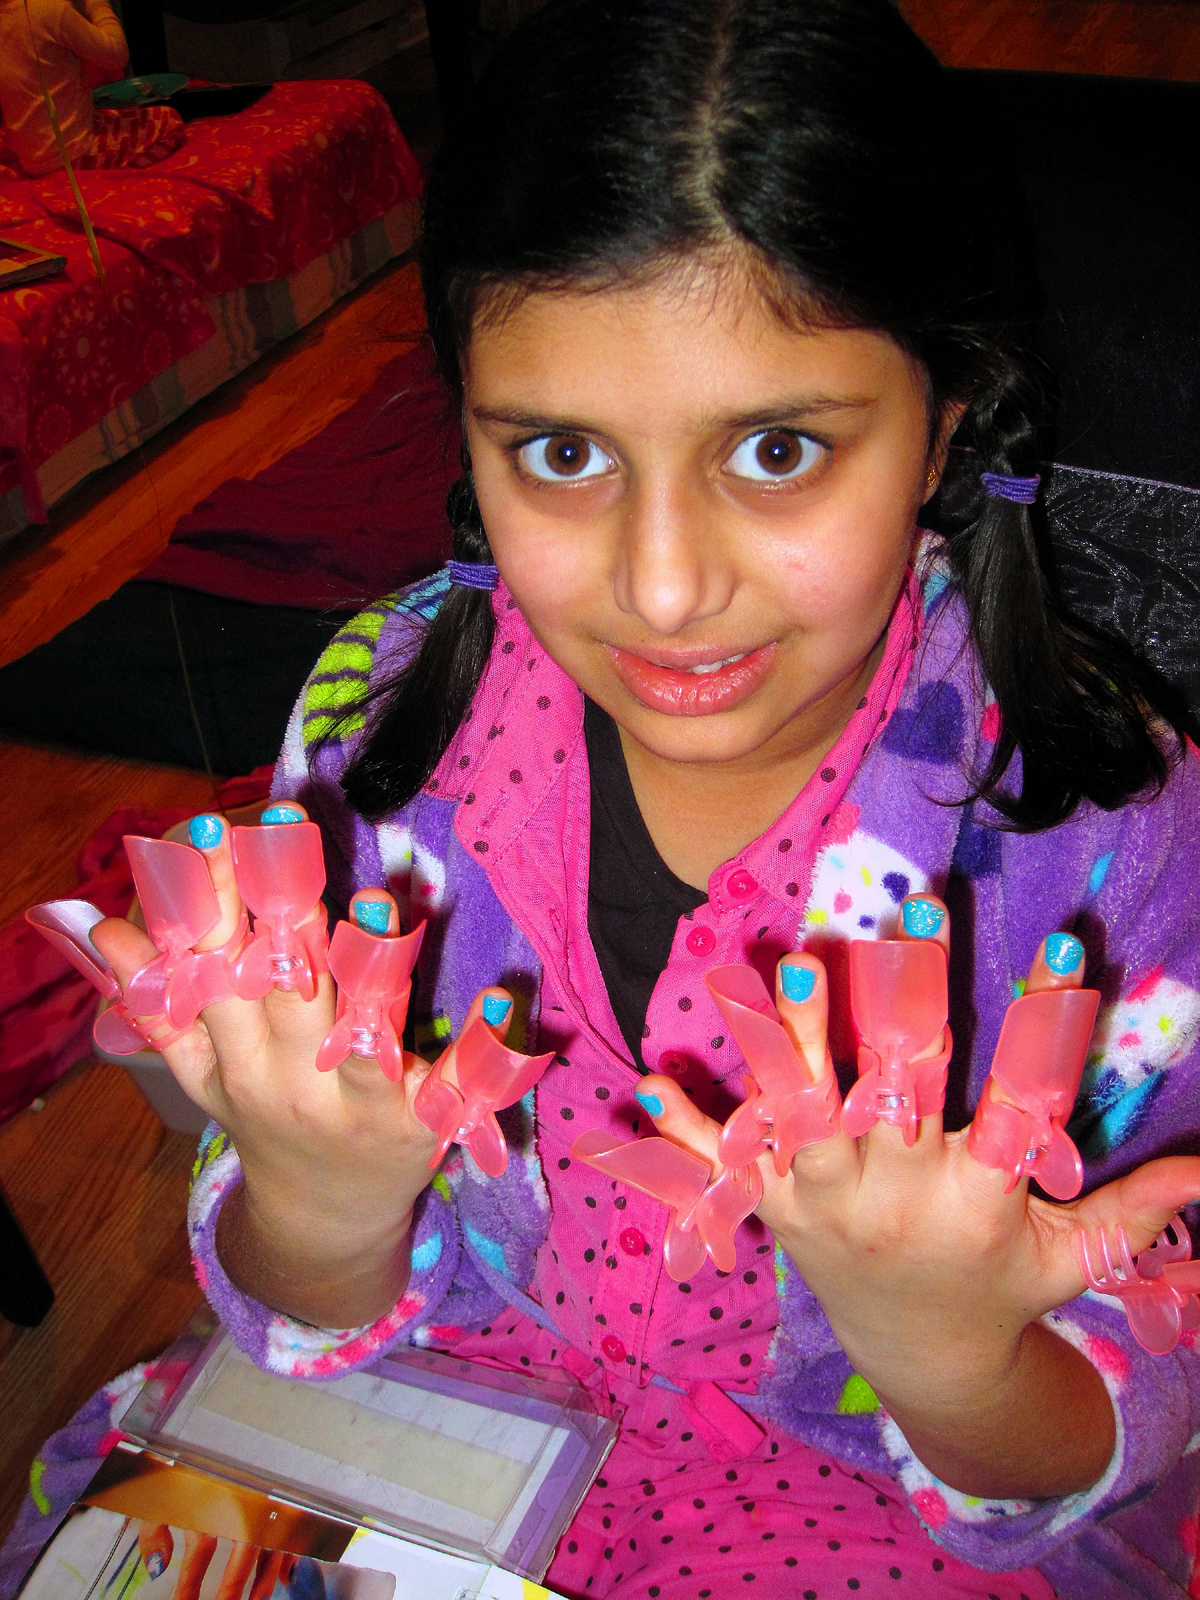 Manicure Protectors For Her Home Mini Mani 